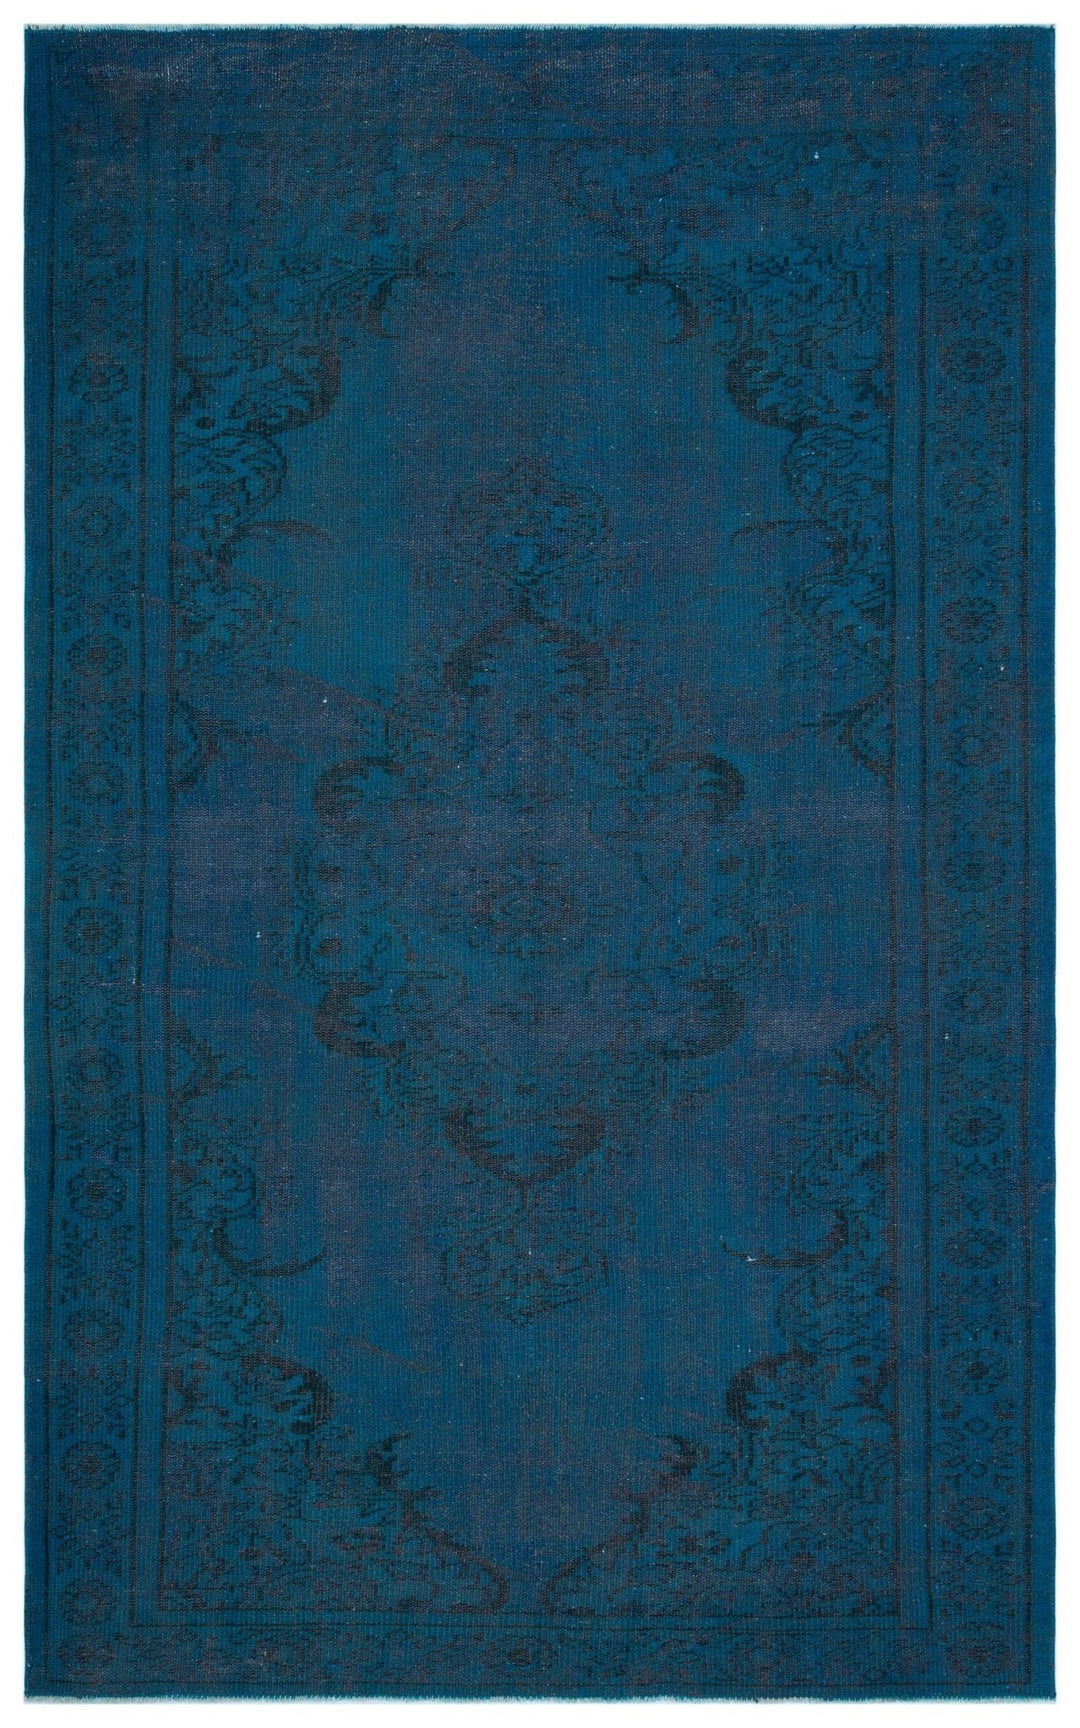 Athens 28054 Dark Blue Tumbled Wool Hand Woven Rug 172 x 278